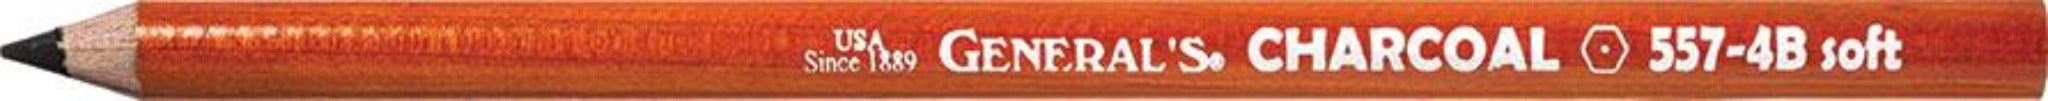 General's Charcoal Pencils - Wyndham Art Supplies